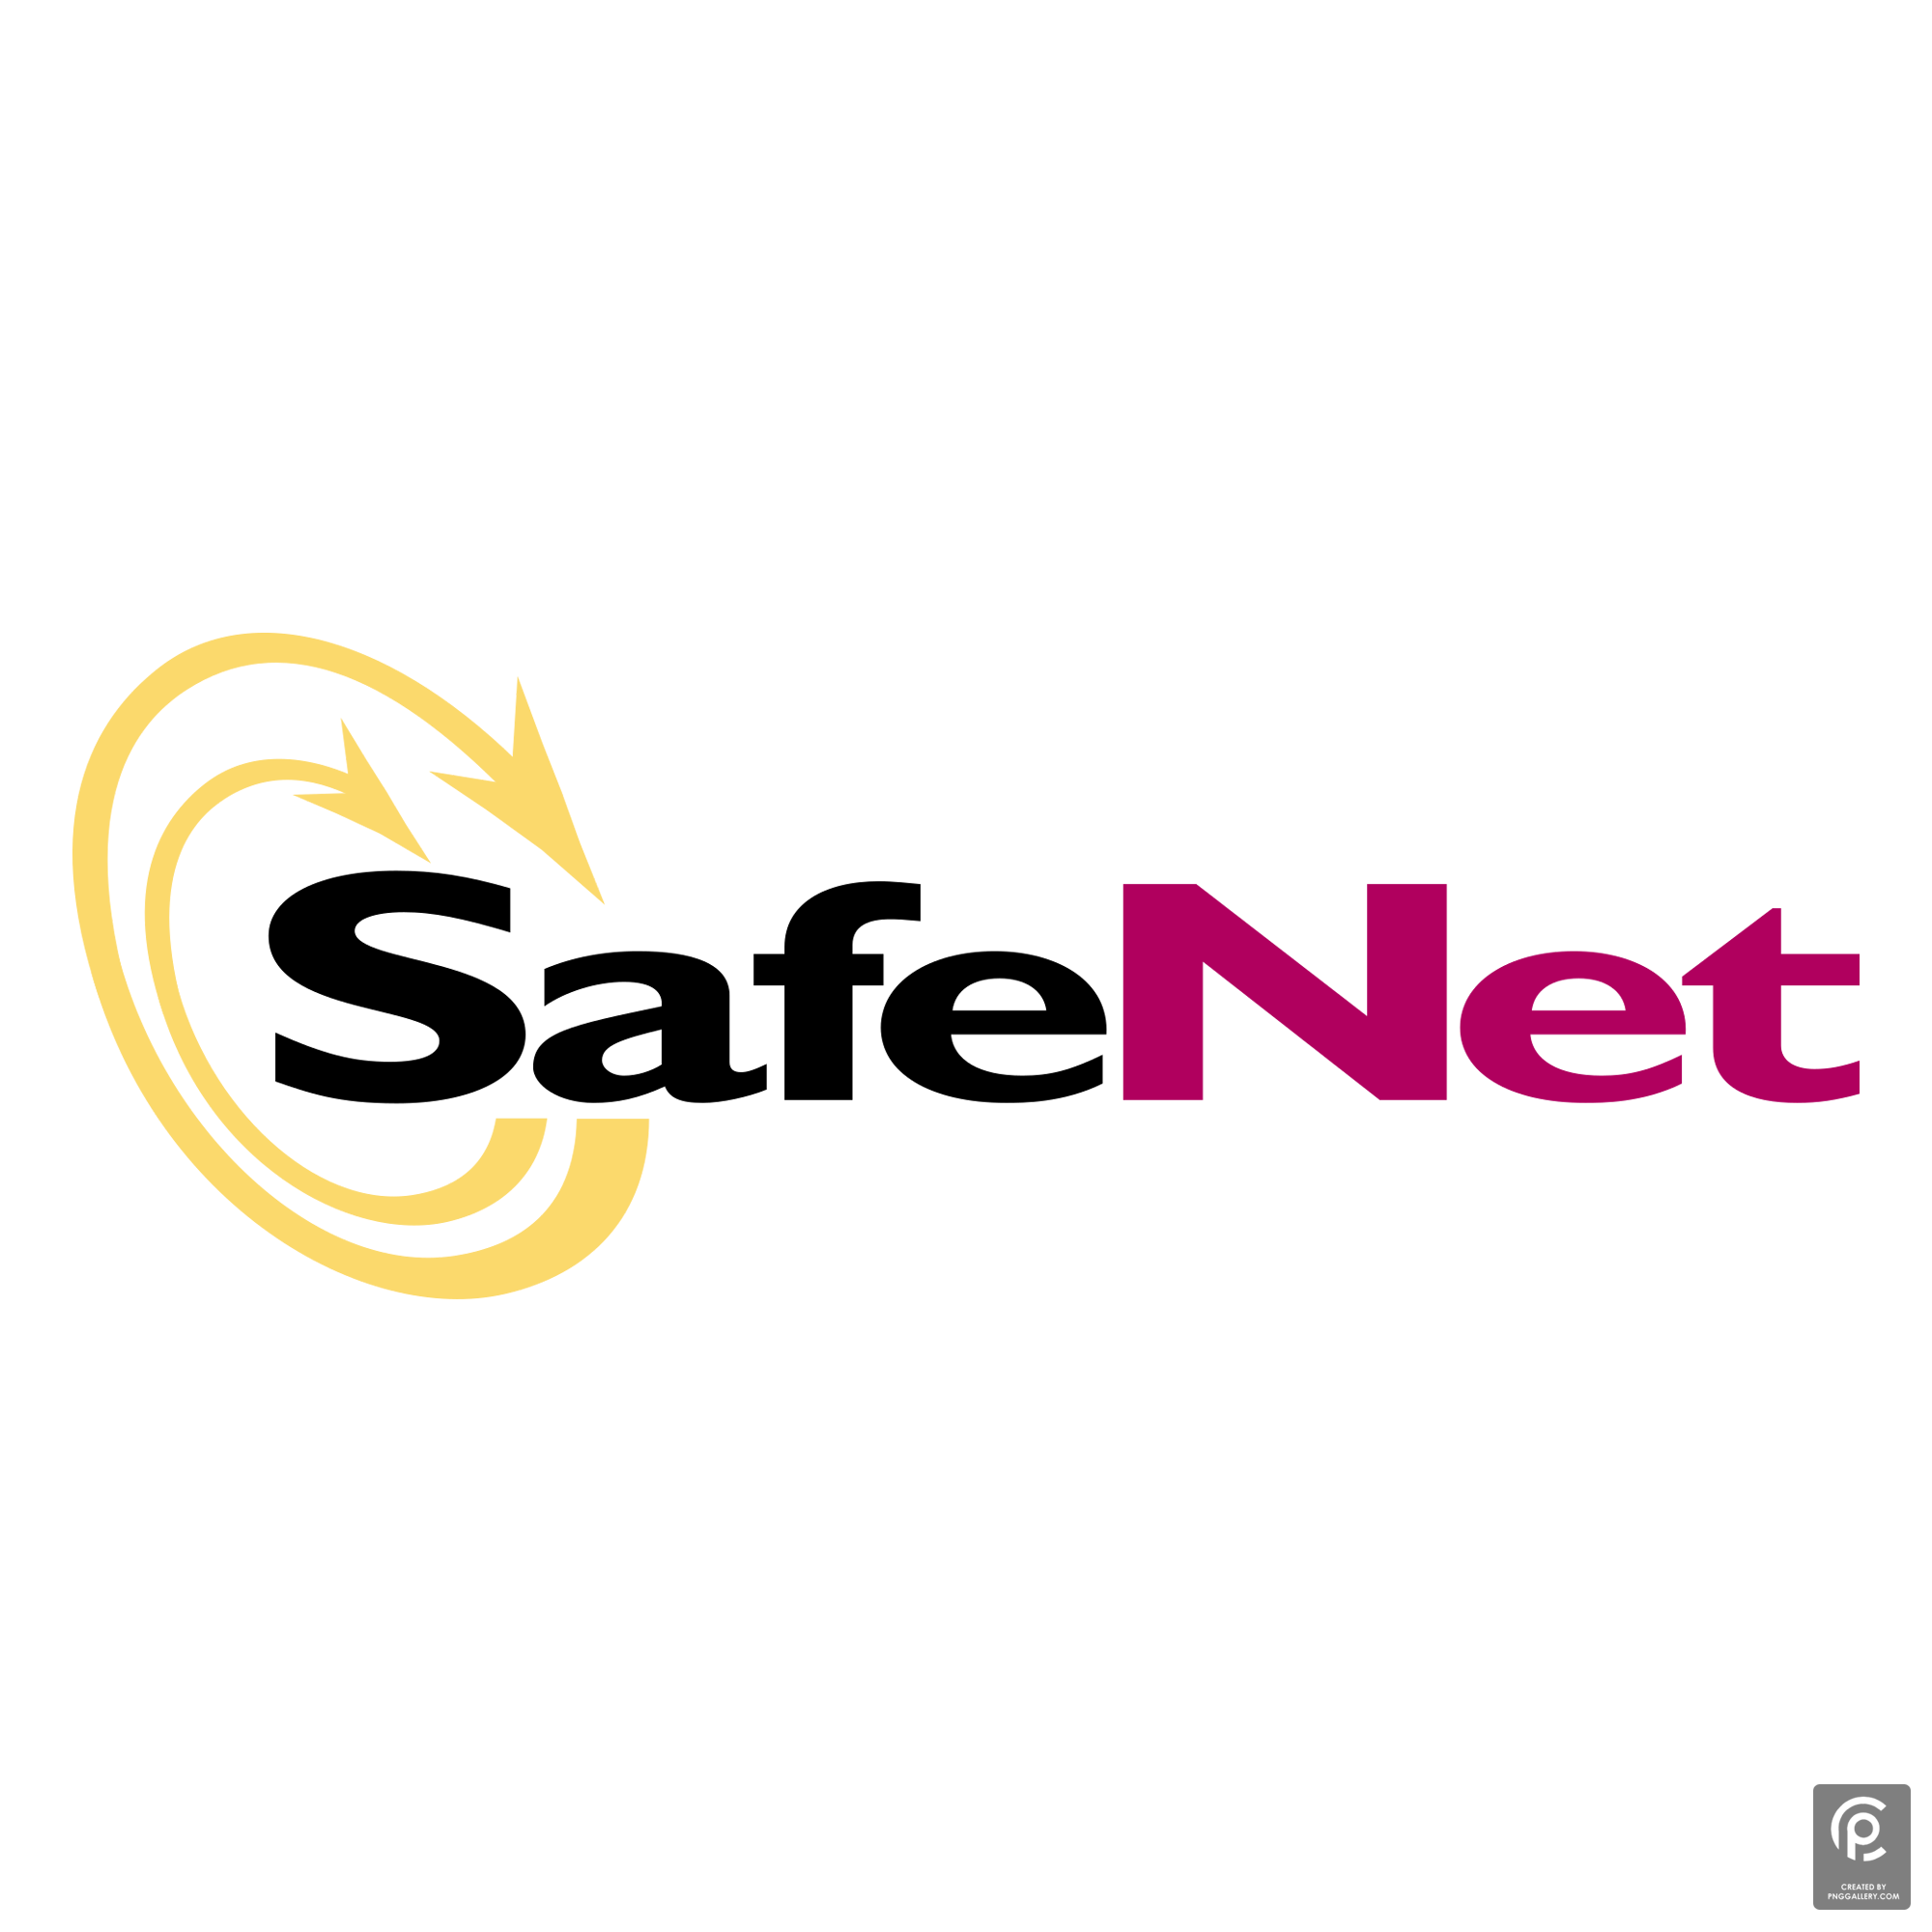 Safenet Logo Transparent Gallery